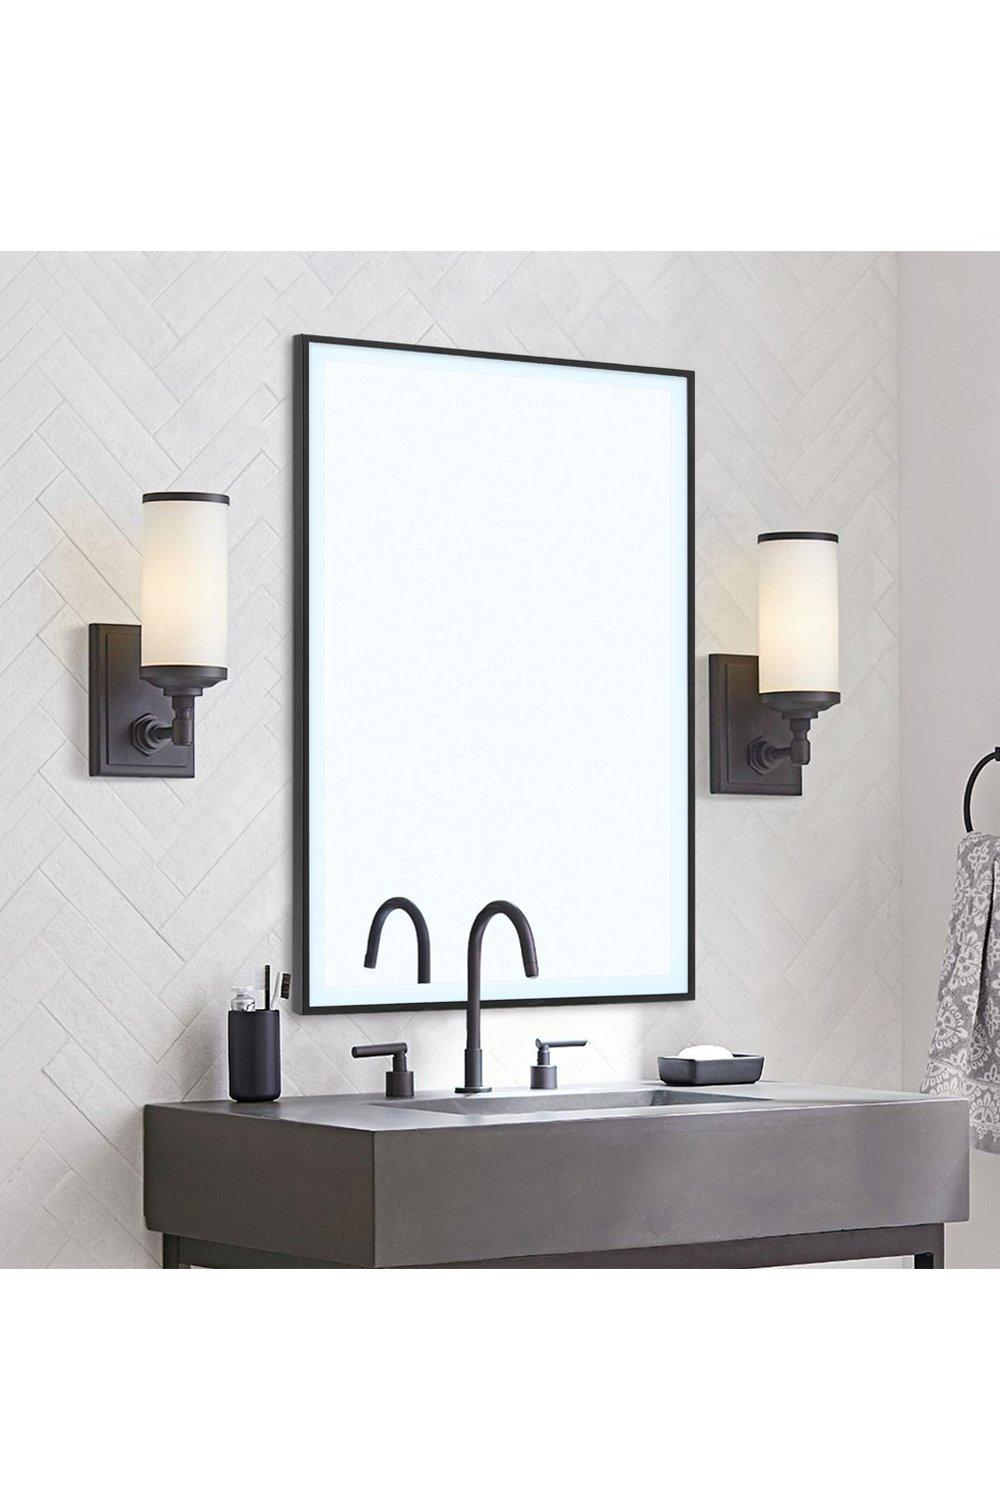 50cm x 70cm Rectangular Anti-fog Bathroom Vanity Mirror Touch Sensor